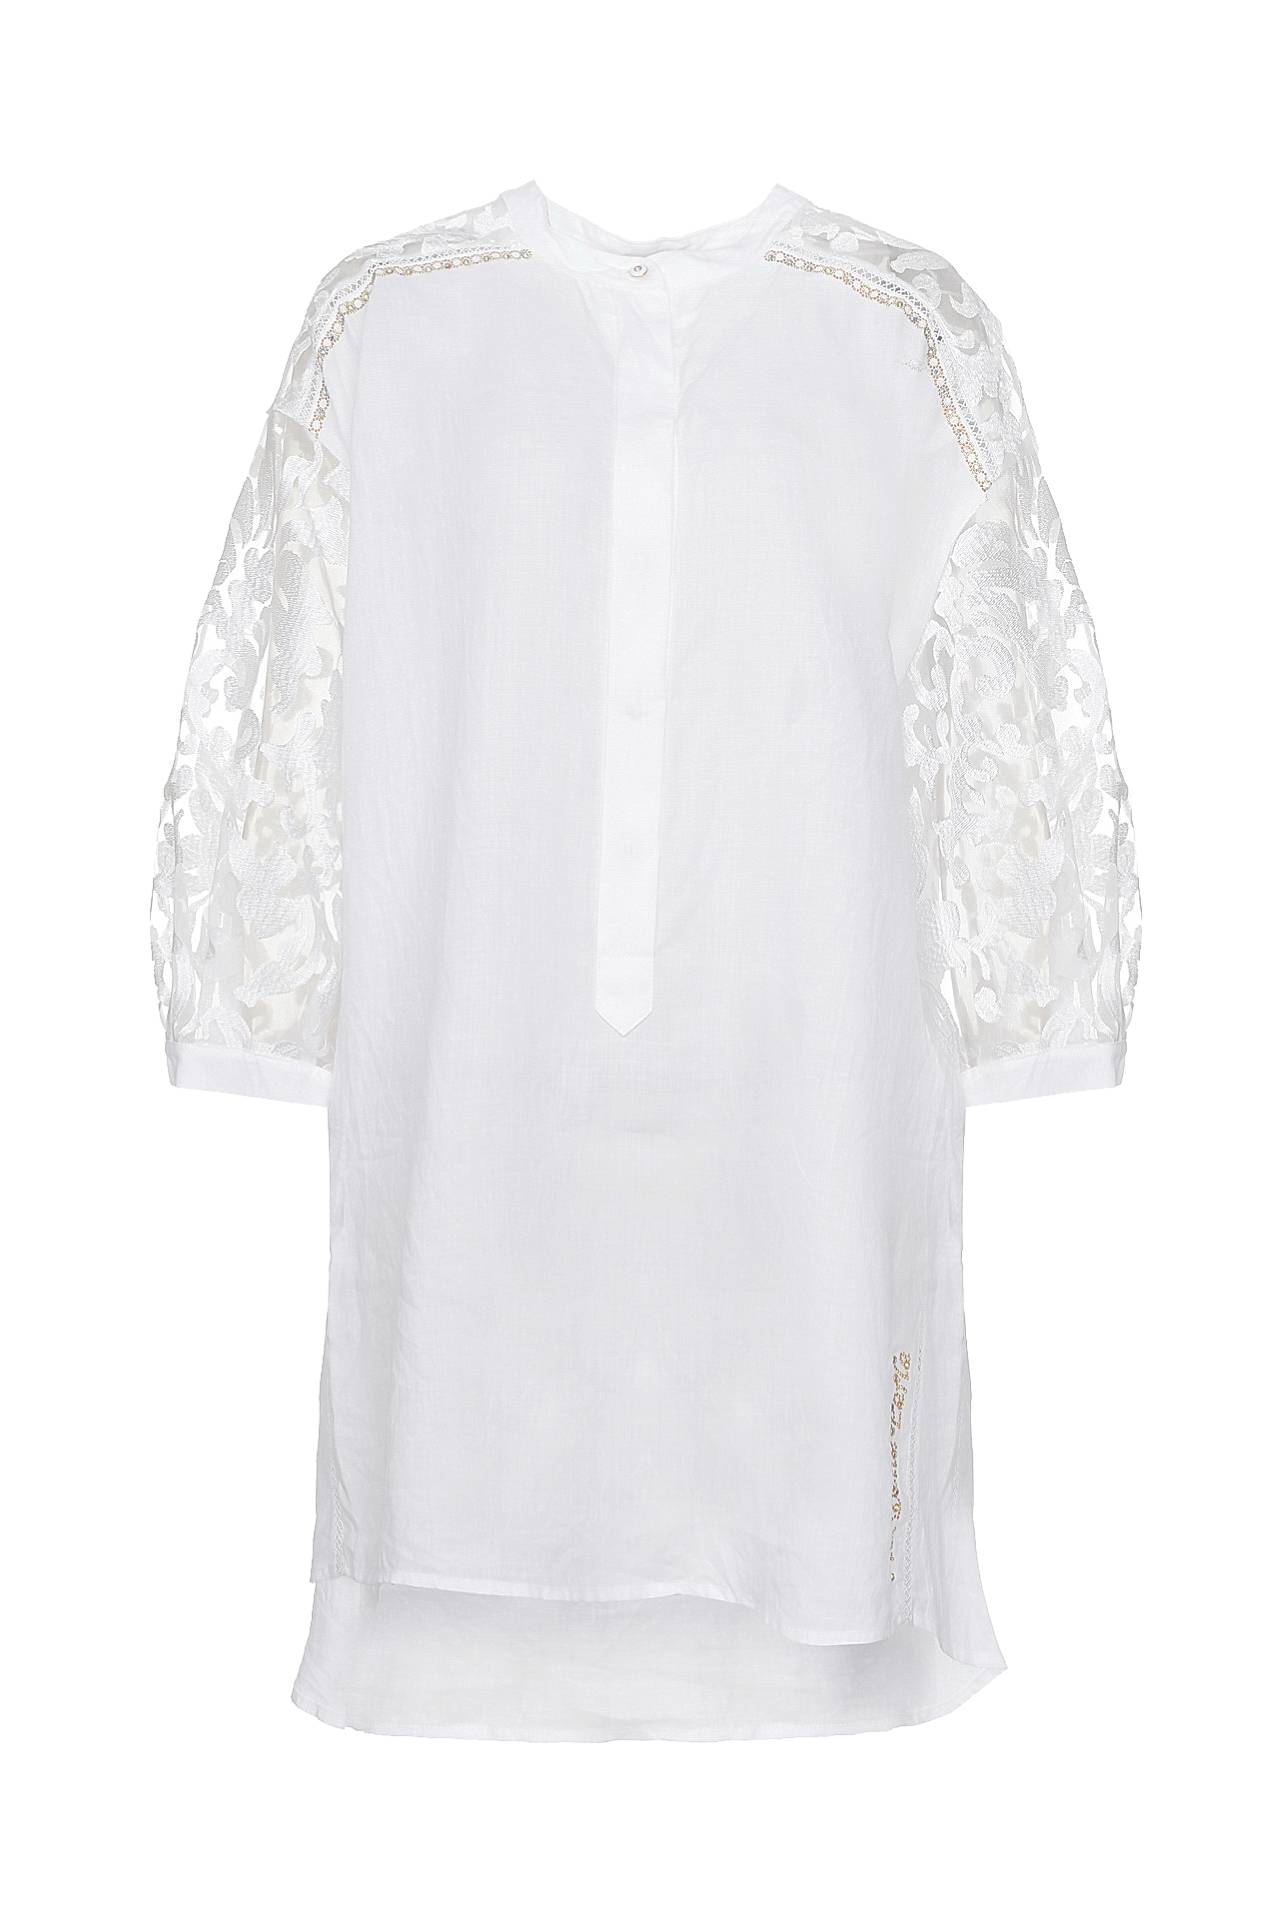 Одежда женская Блузка VDP VIA DELLE PERLE (100/15.2). Купить за 17450 руб.